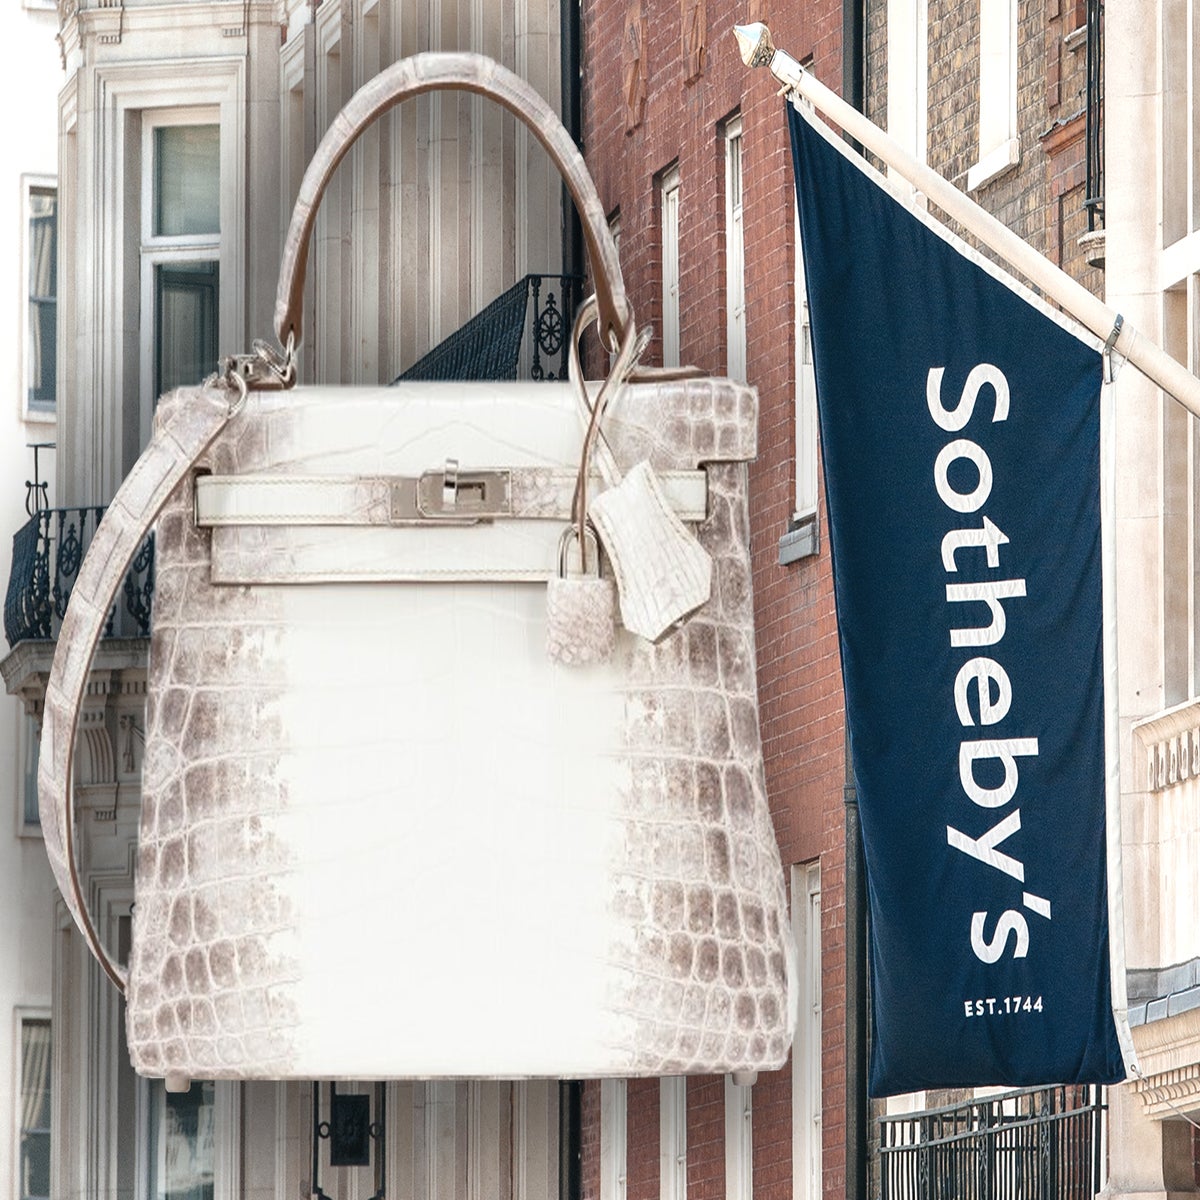 Hermès Handbags Take the Spotlight at Auctions